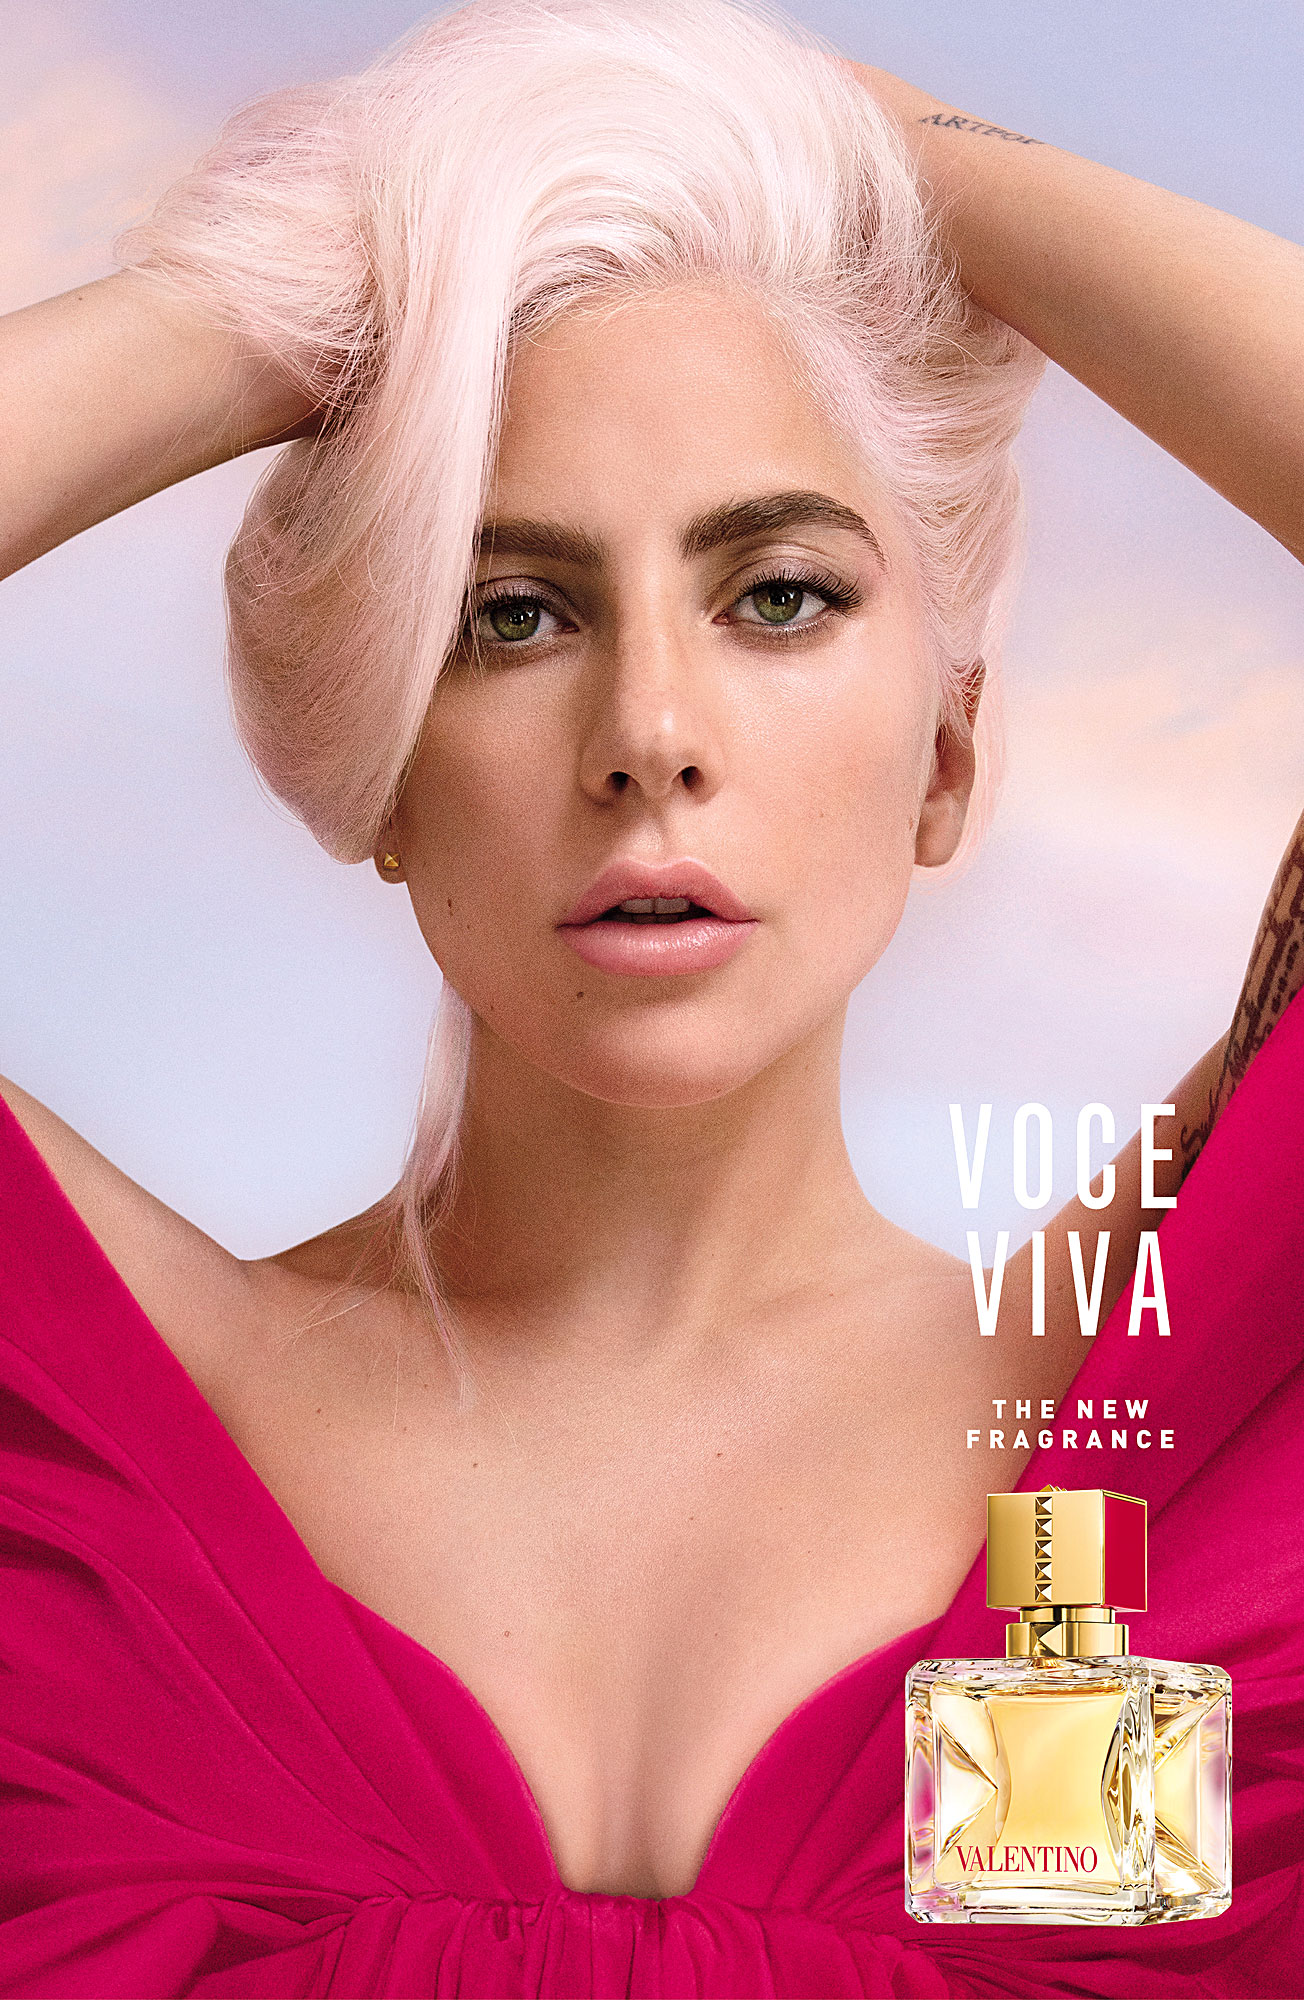 Lady Gaga X Valentino Voce Viva Fragrance Campaign Bts Pics 